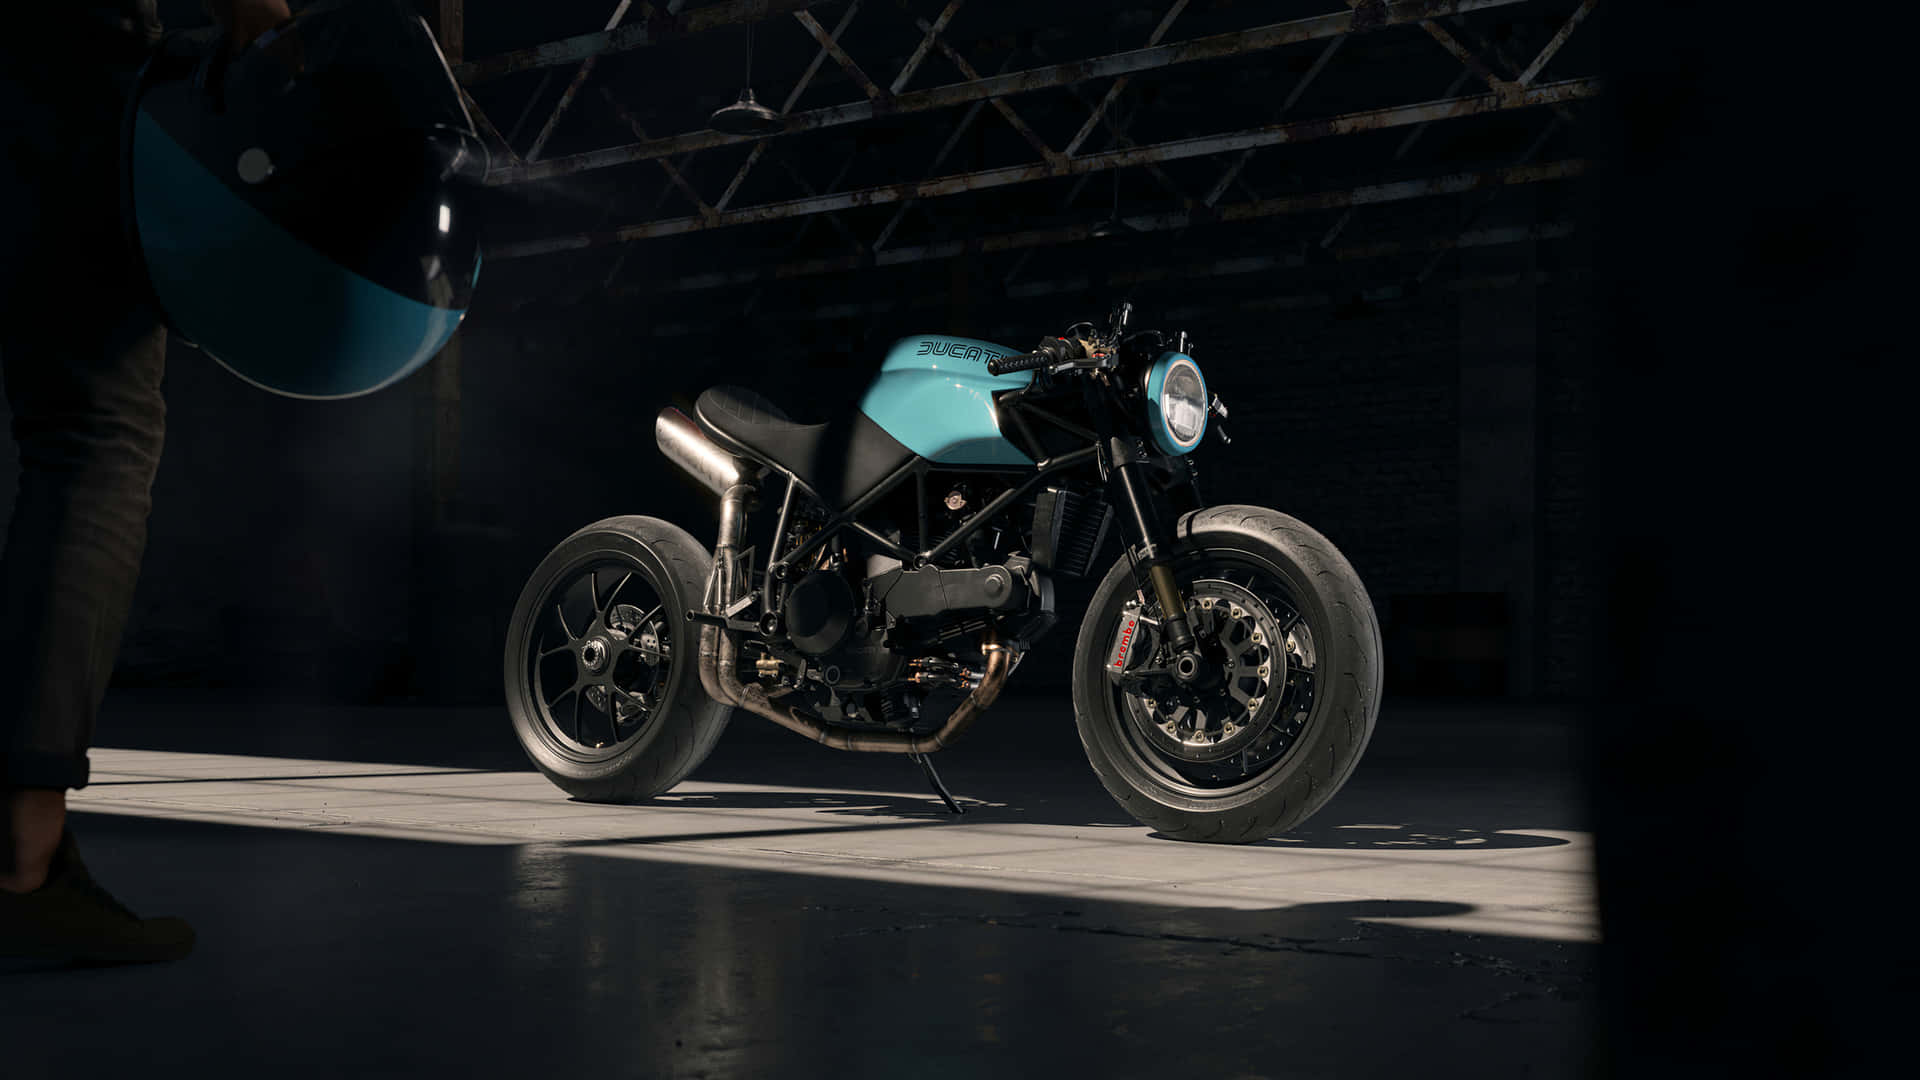 2560x1440 Ducati Motorcycle Wallpaper